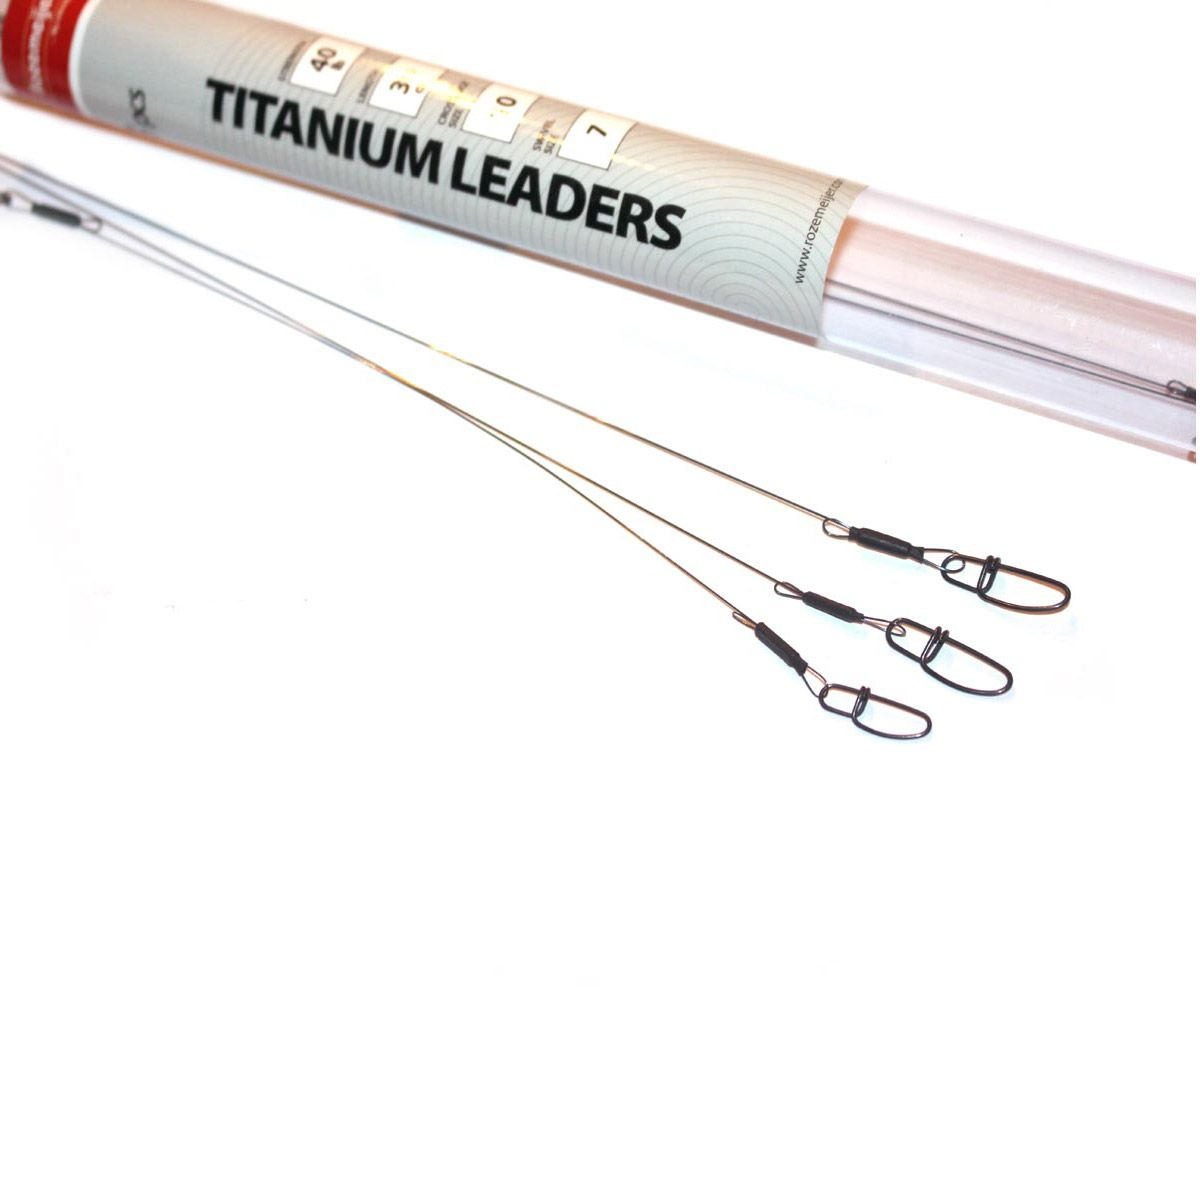 Rozemeijer USA Titanium Leaders -  Lengte 20 cm 20 lbs -  Lengte 30 cm 40 lbs -  Lengte 30 cm 75 lbs -  Lengte 30 cm 30 lbs